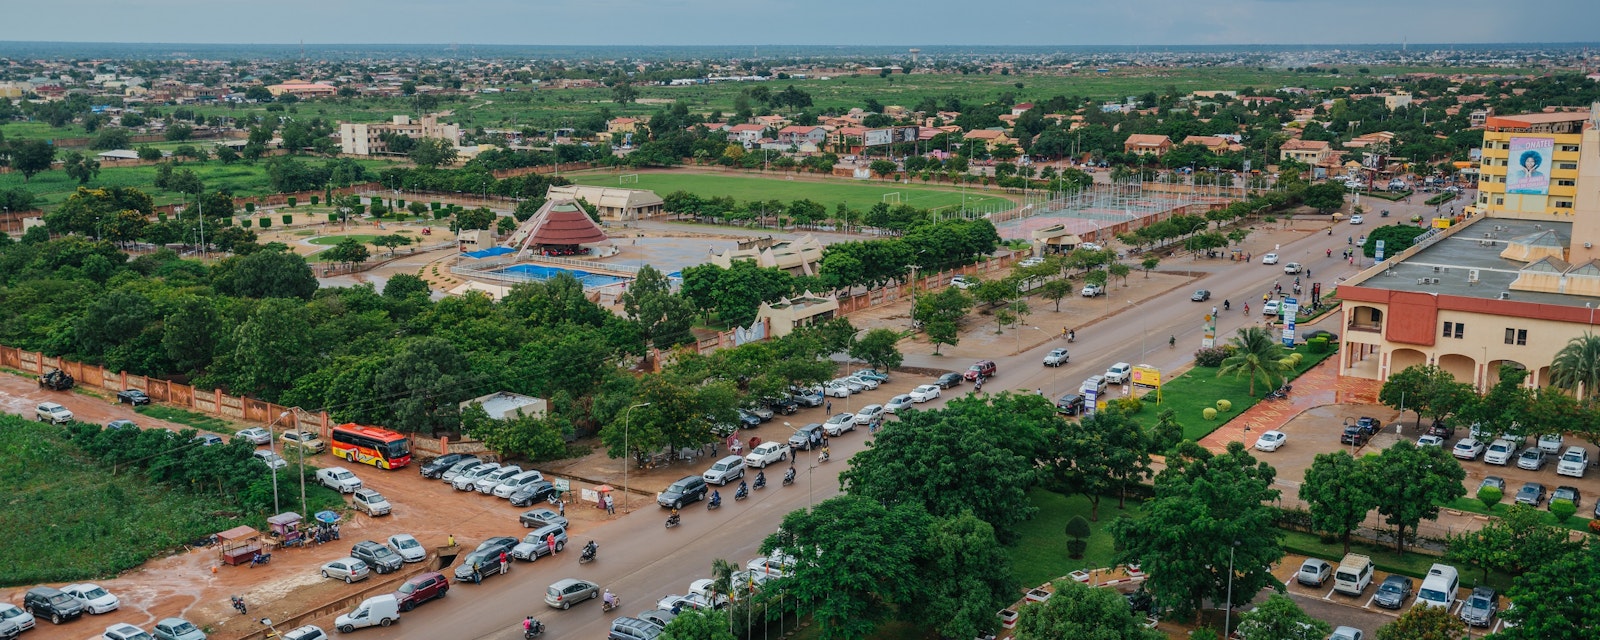 Ouagadougou,,Burkina,Faso,-,August,12,,2018:,General,View,Of